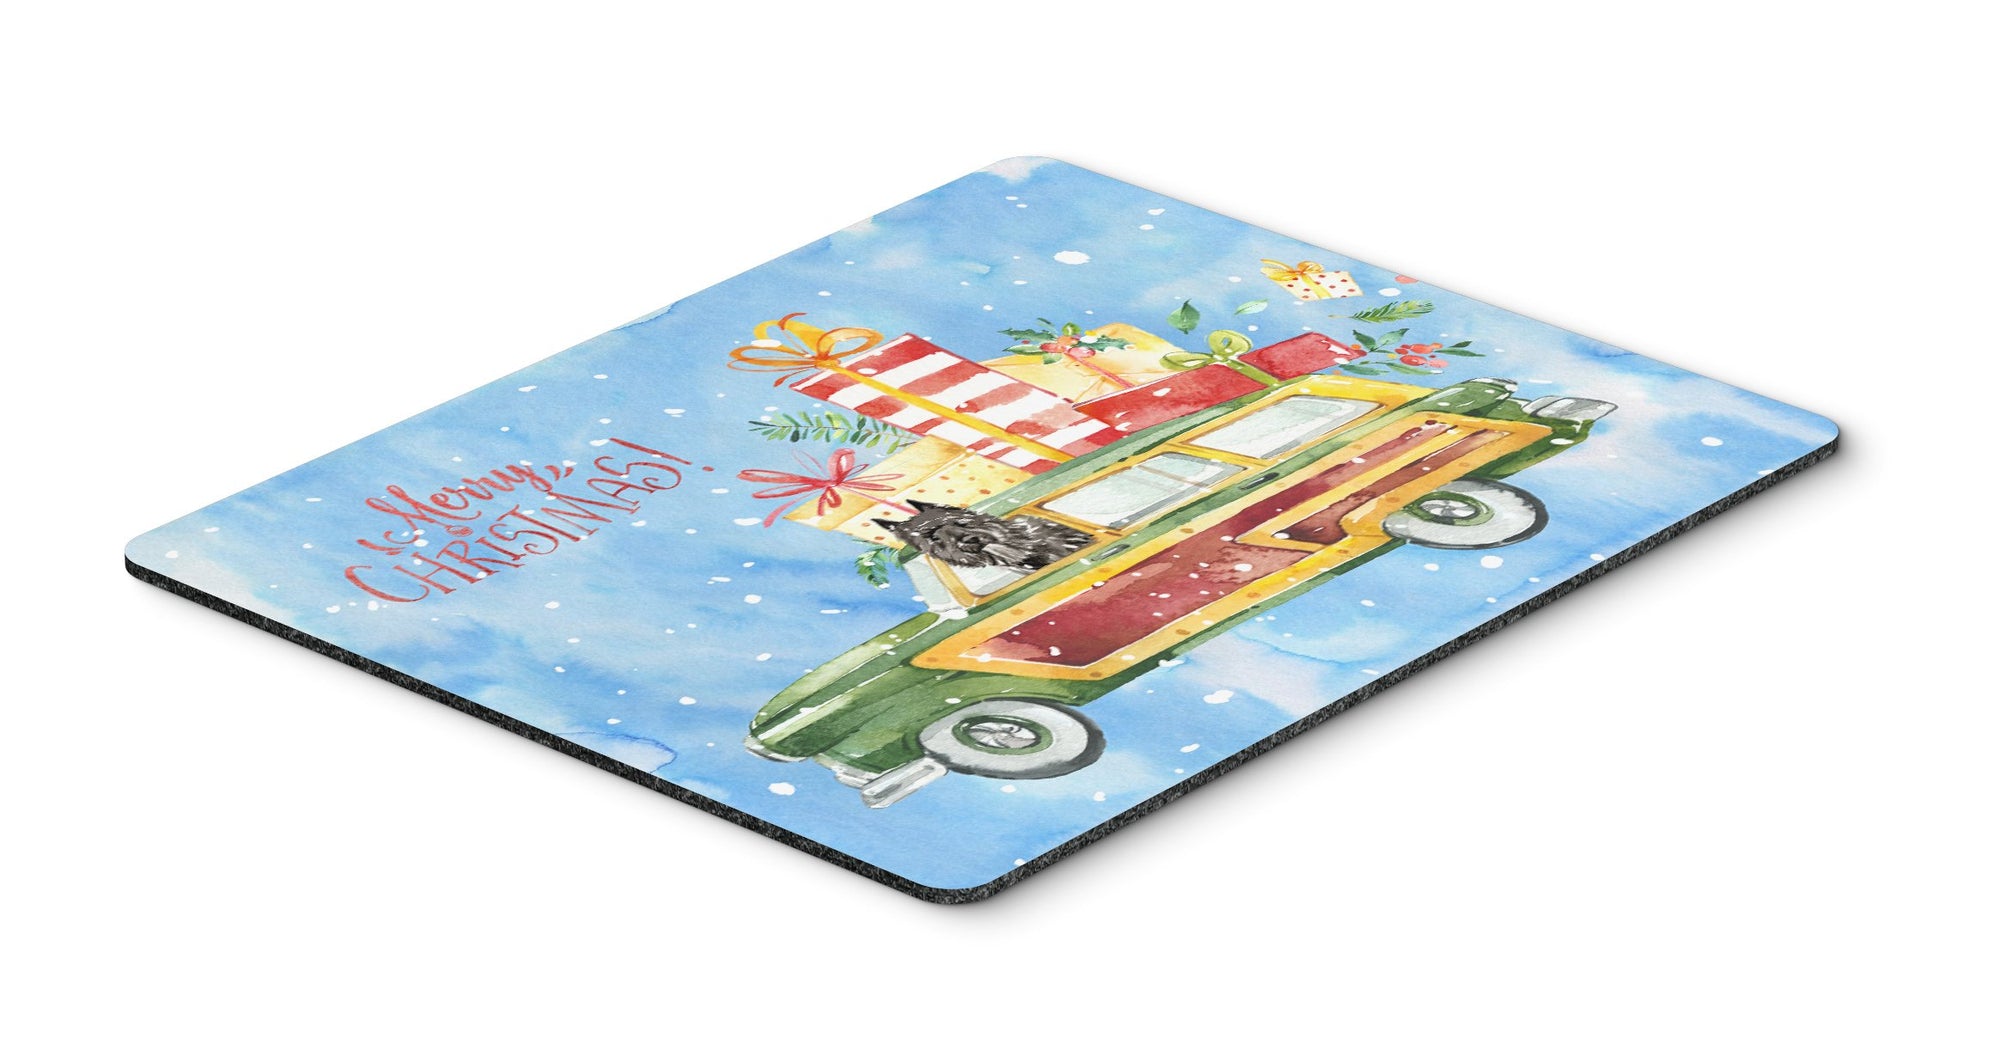 Merry Christmas Bouvier des Flandres Mouse Pad, Hot Pad or Trivet CK2398MP by Caroline's Treasures